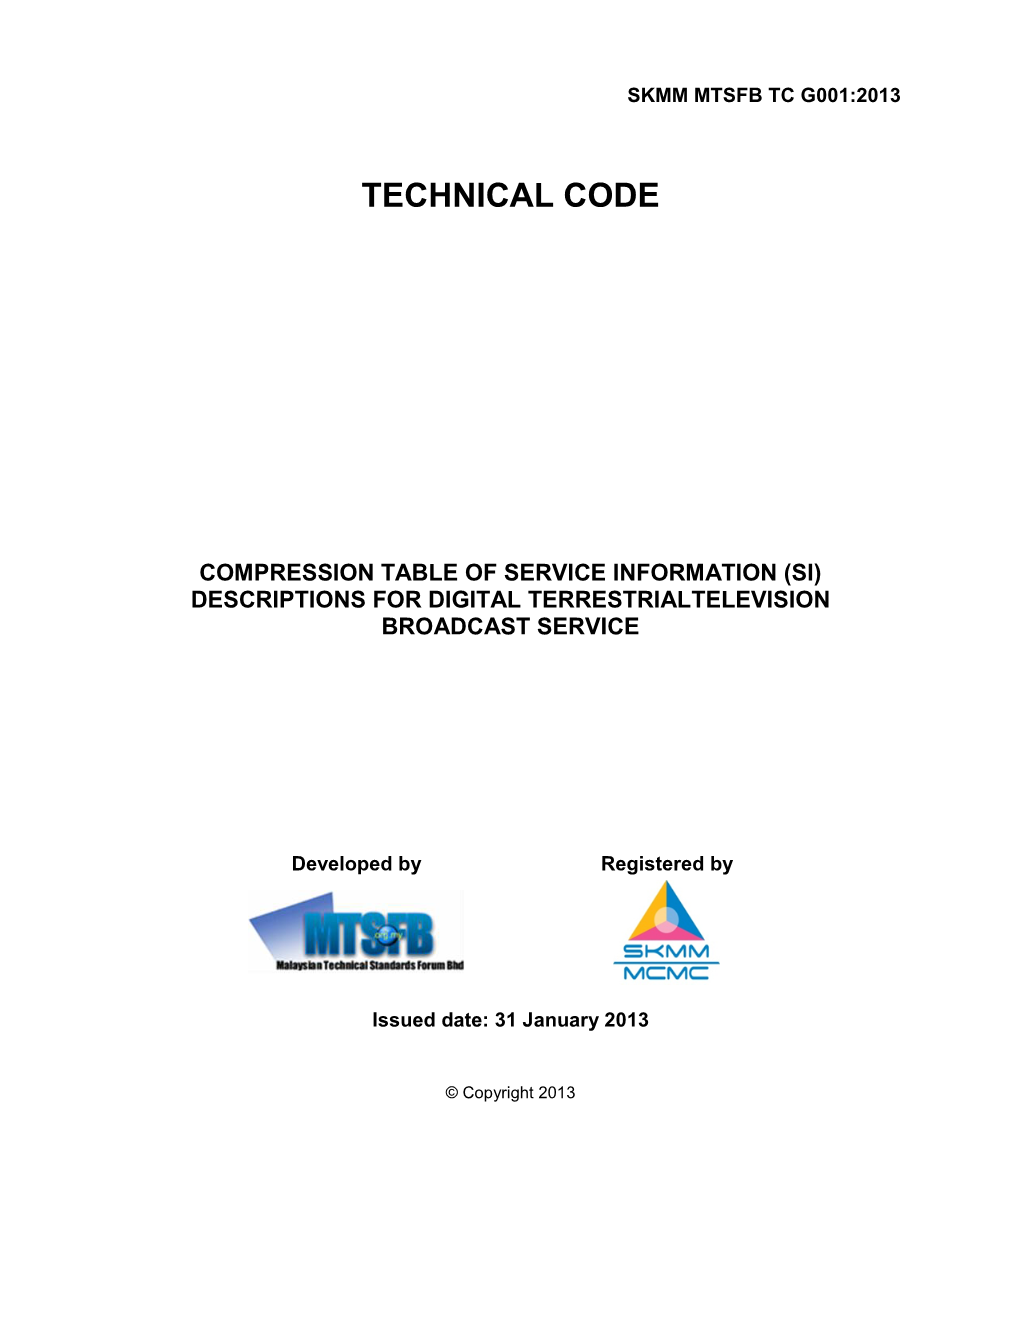 Technical Code